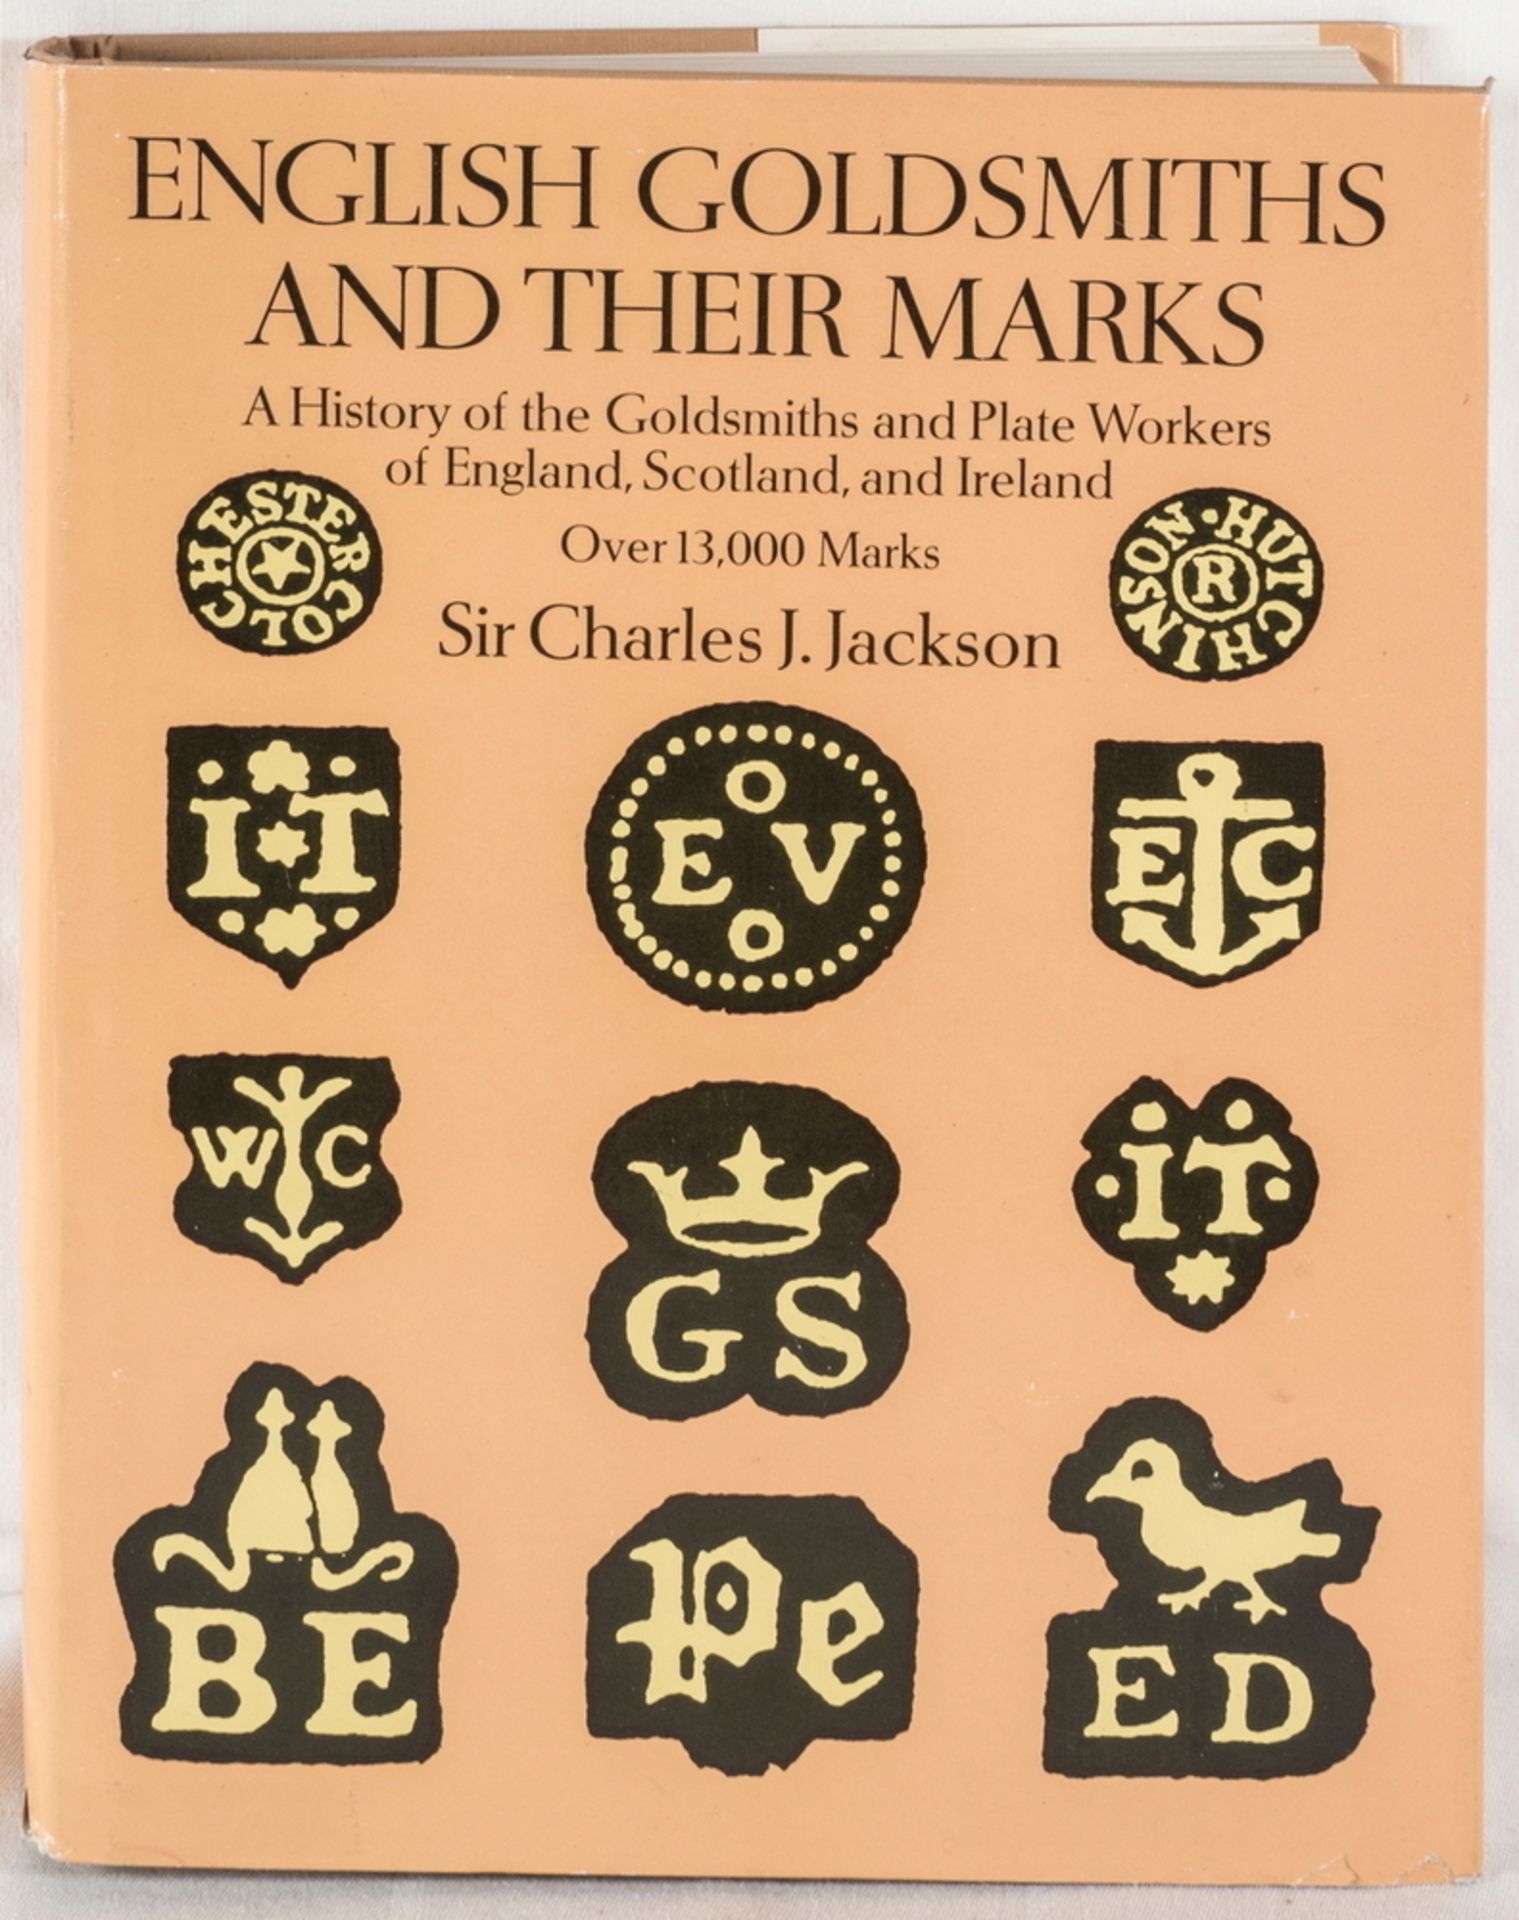 Sir Charles J. Jackson, "English Goldsmiths and their Marks".